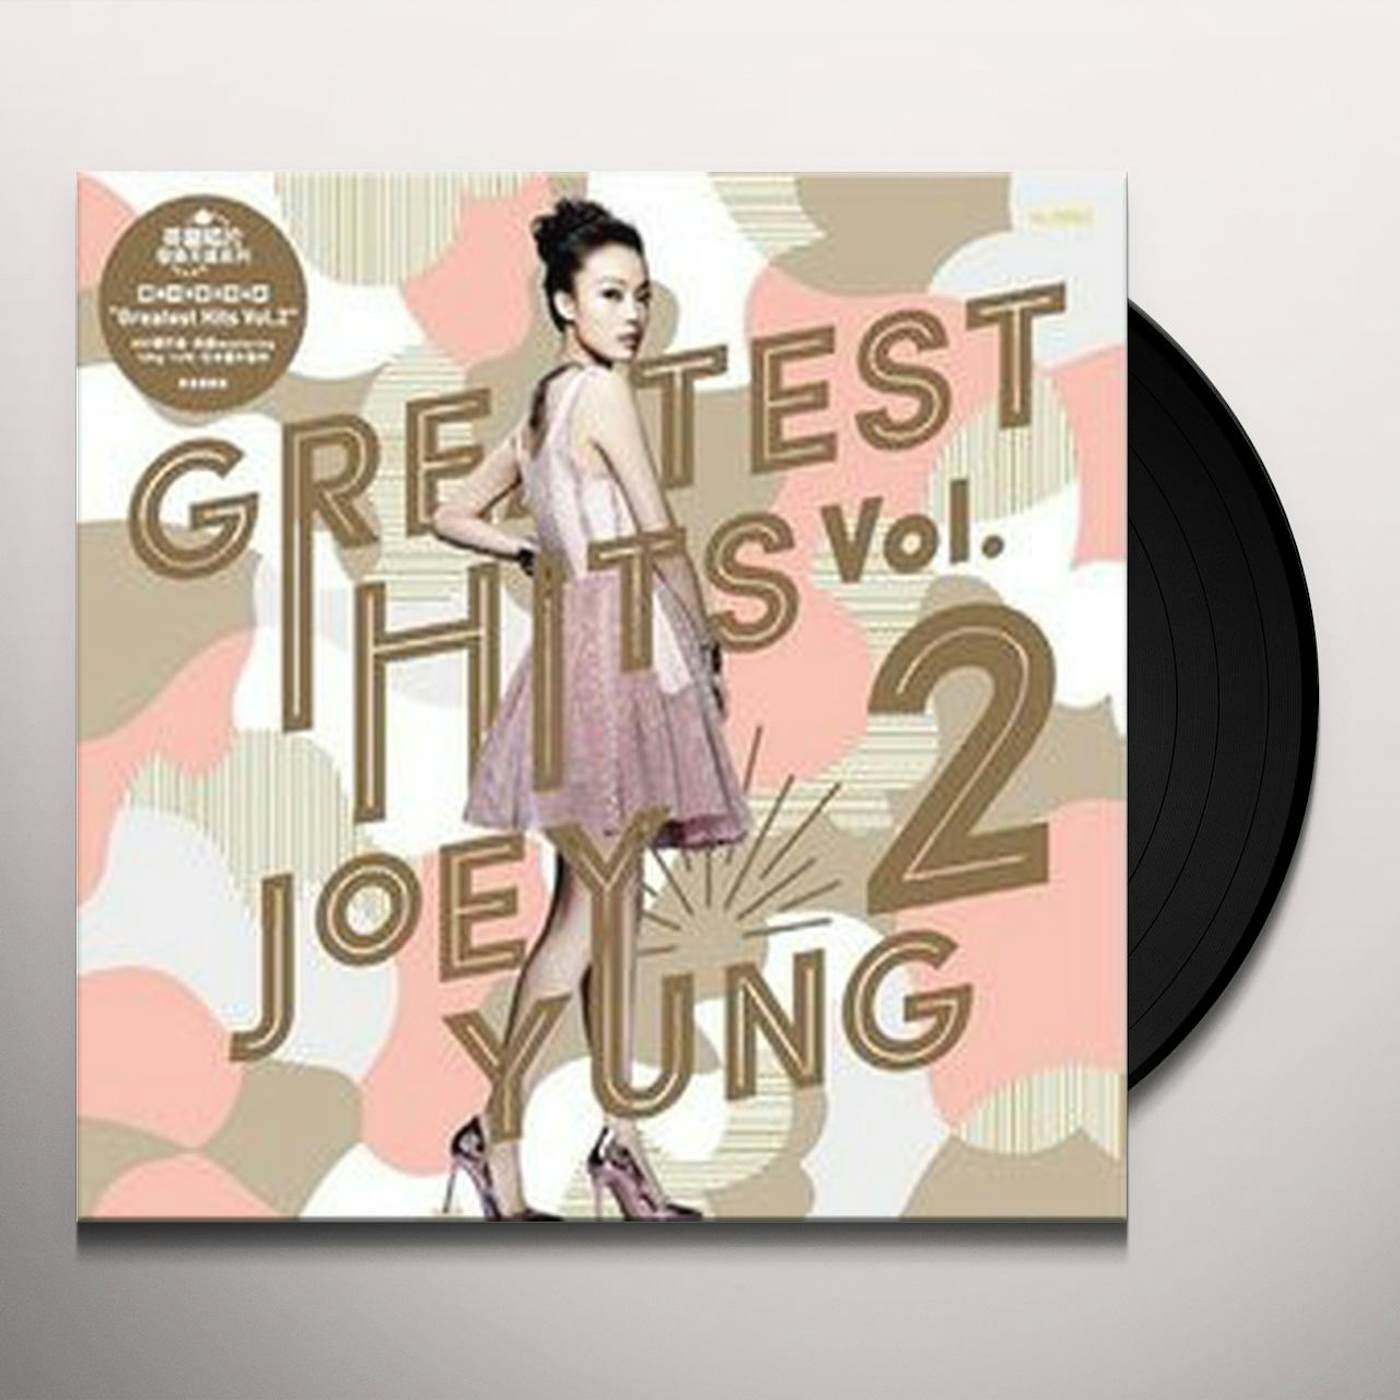 Yung Joey GREATEST HITS VOL 2 Vinyl Record